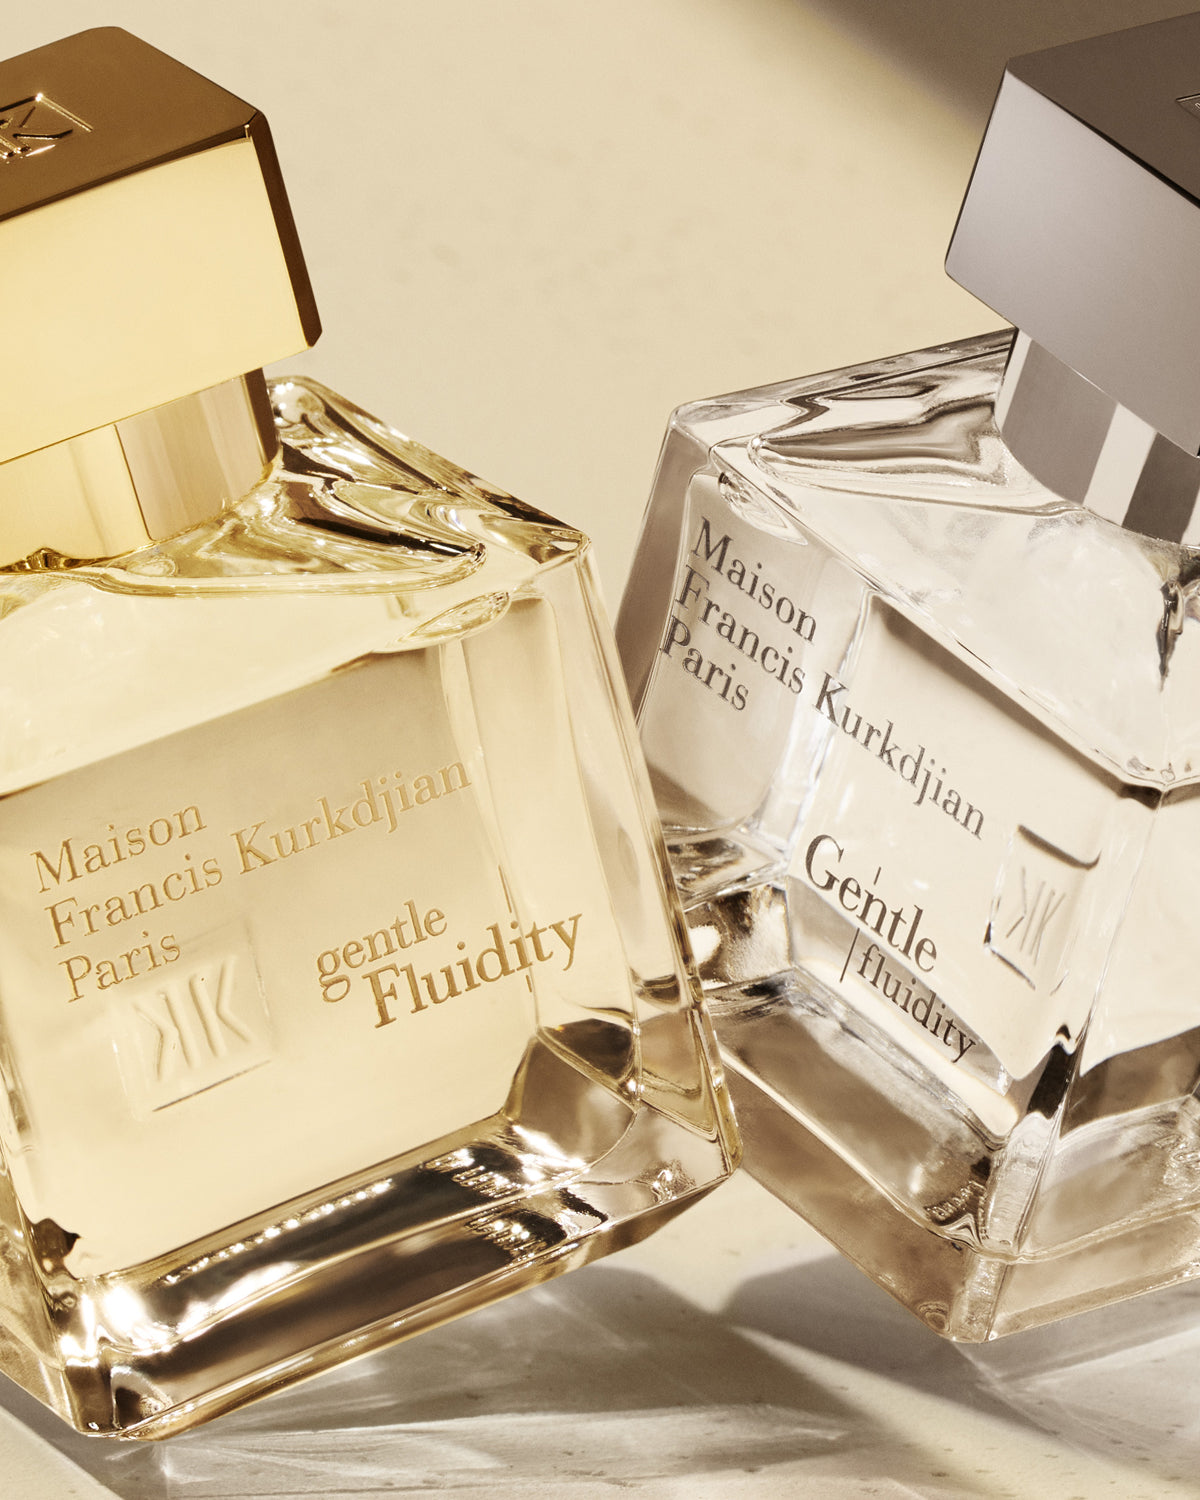 Gentle Fluidity Gold By Maison Francis Kurkdjian EDP Perfume – Splash  Fragrance